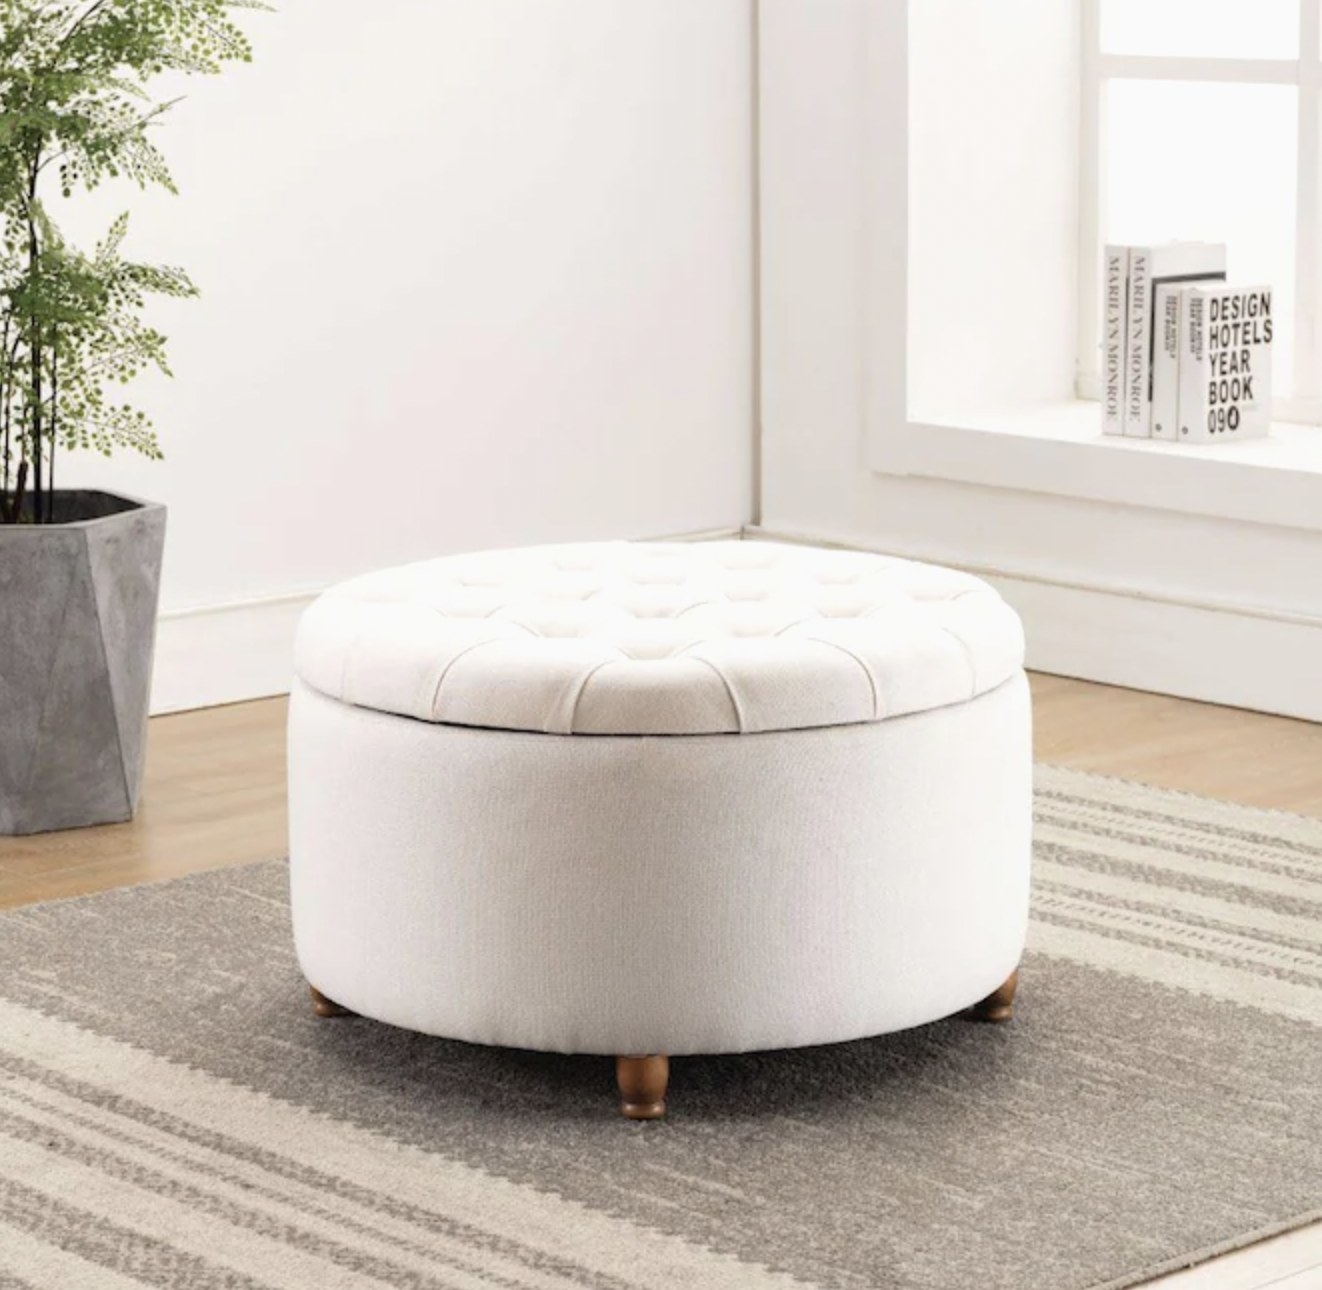 Cream colored 28-inch circular storage ottoman on the floor